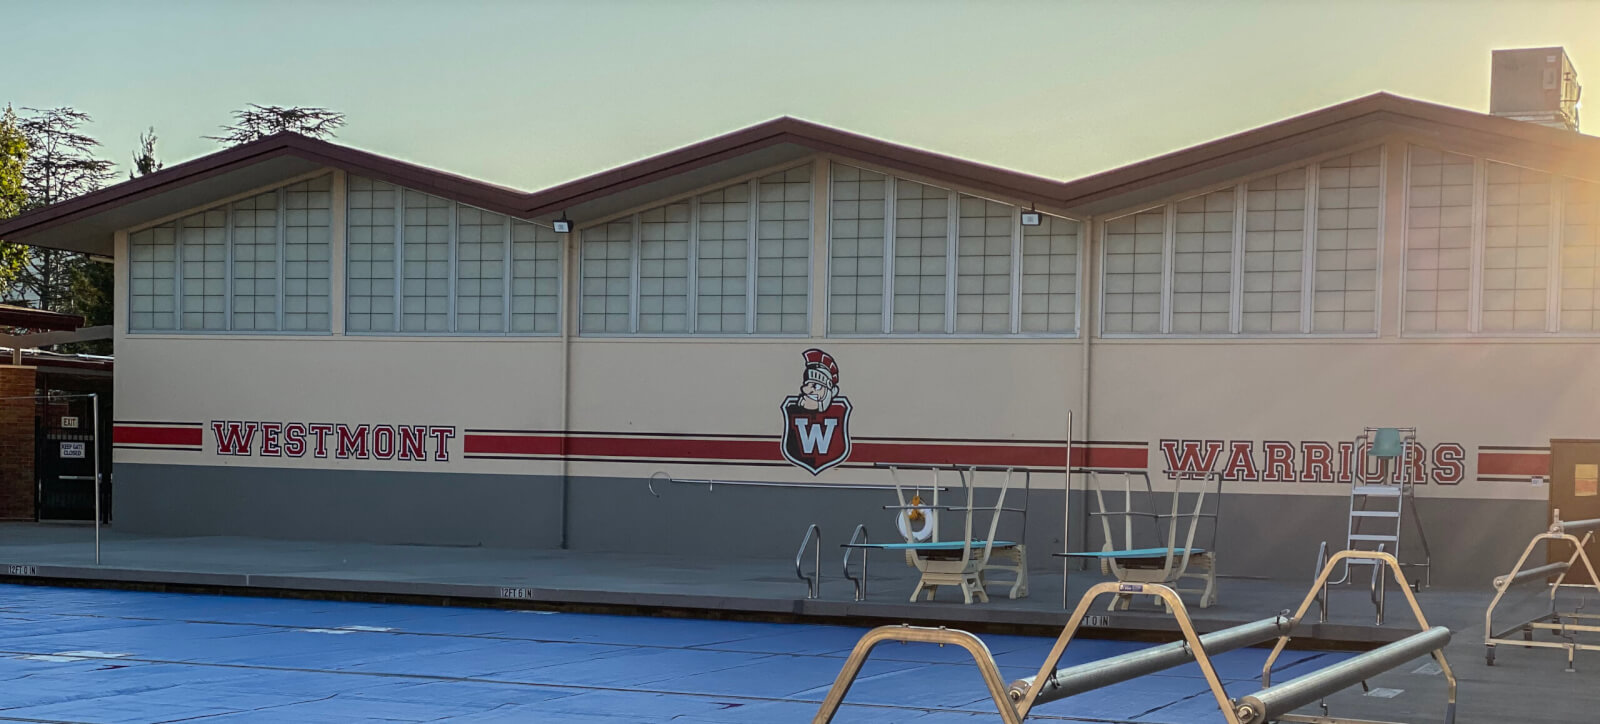 San Jose school signs westmont high pool paint mural mascot